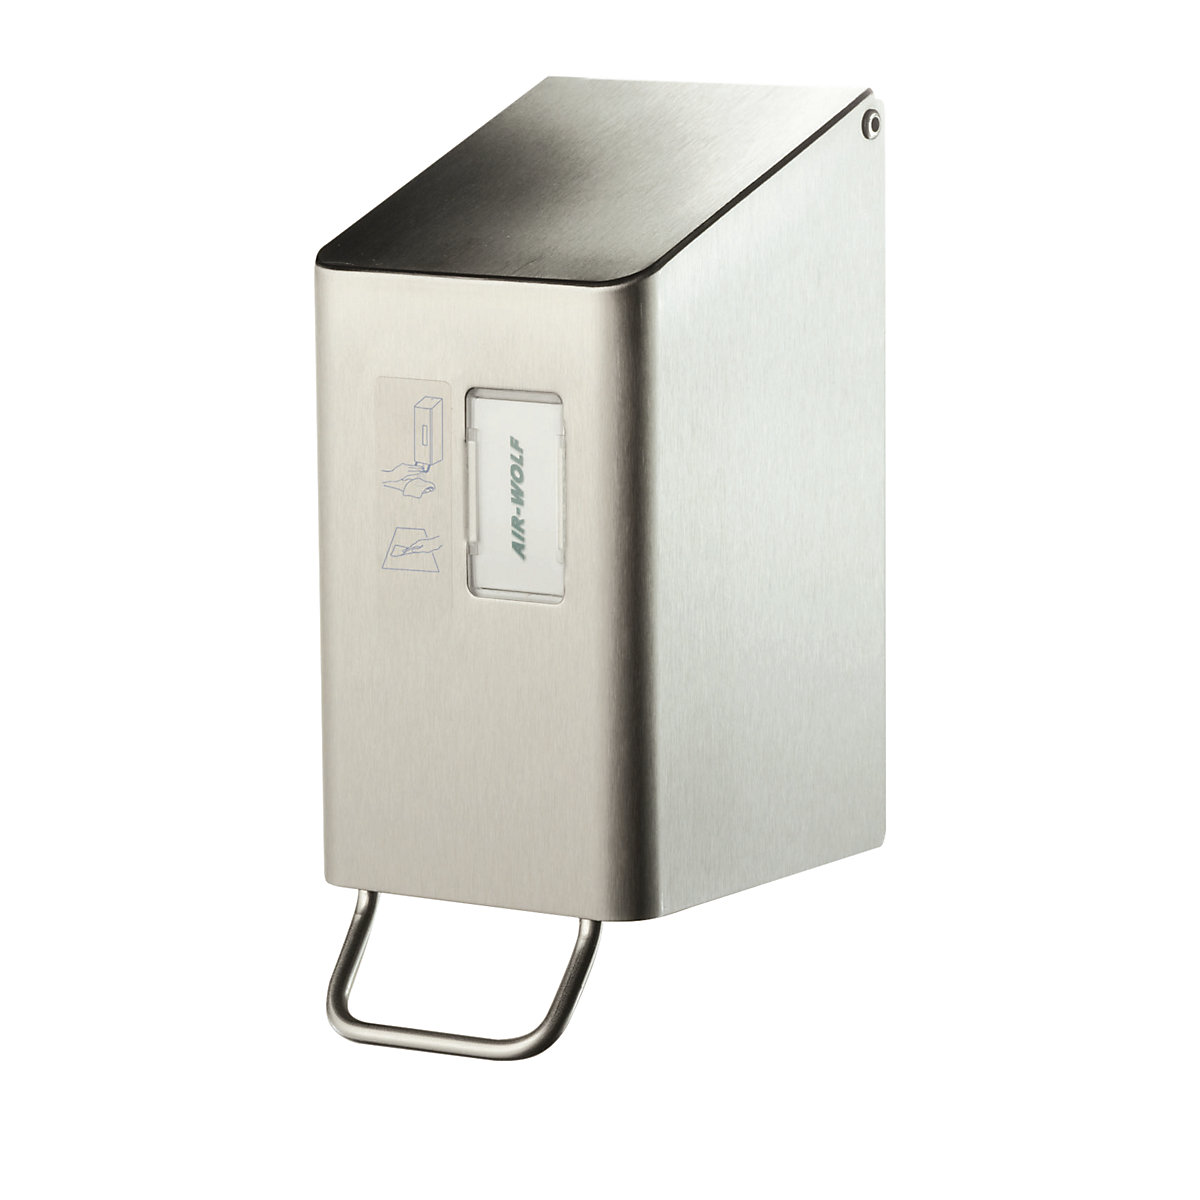 Podajalnik za čistilo za WC-deske – AIR-WOLF